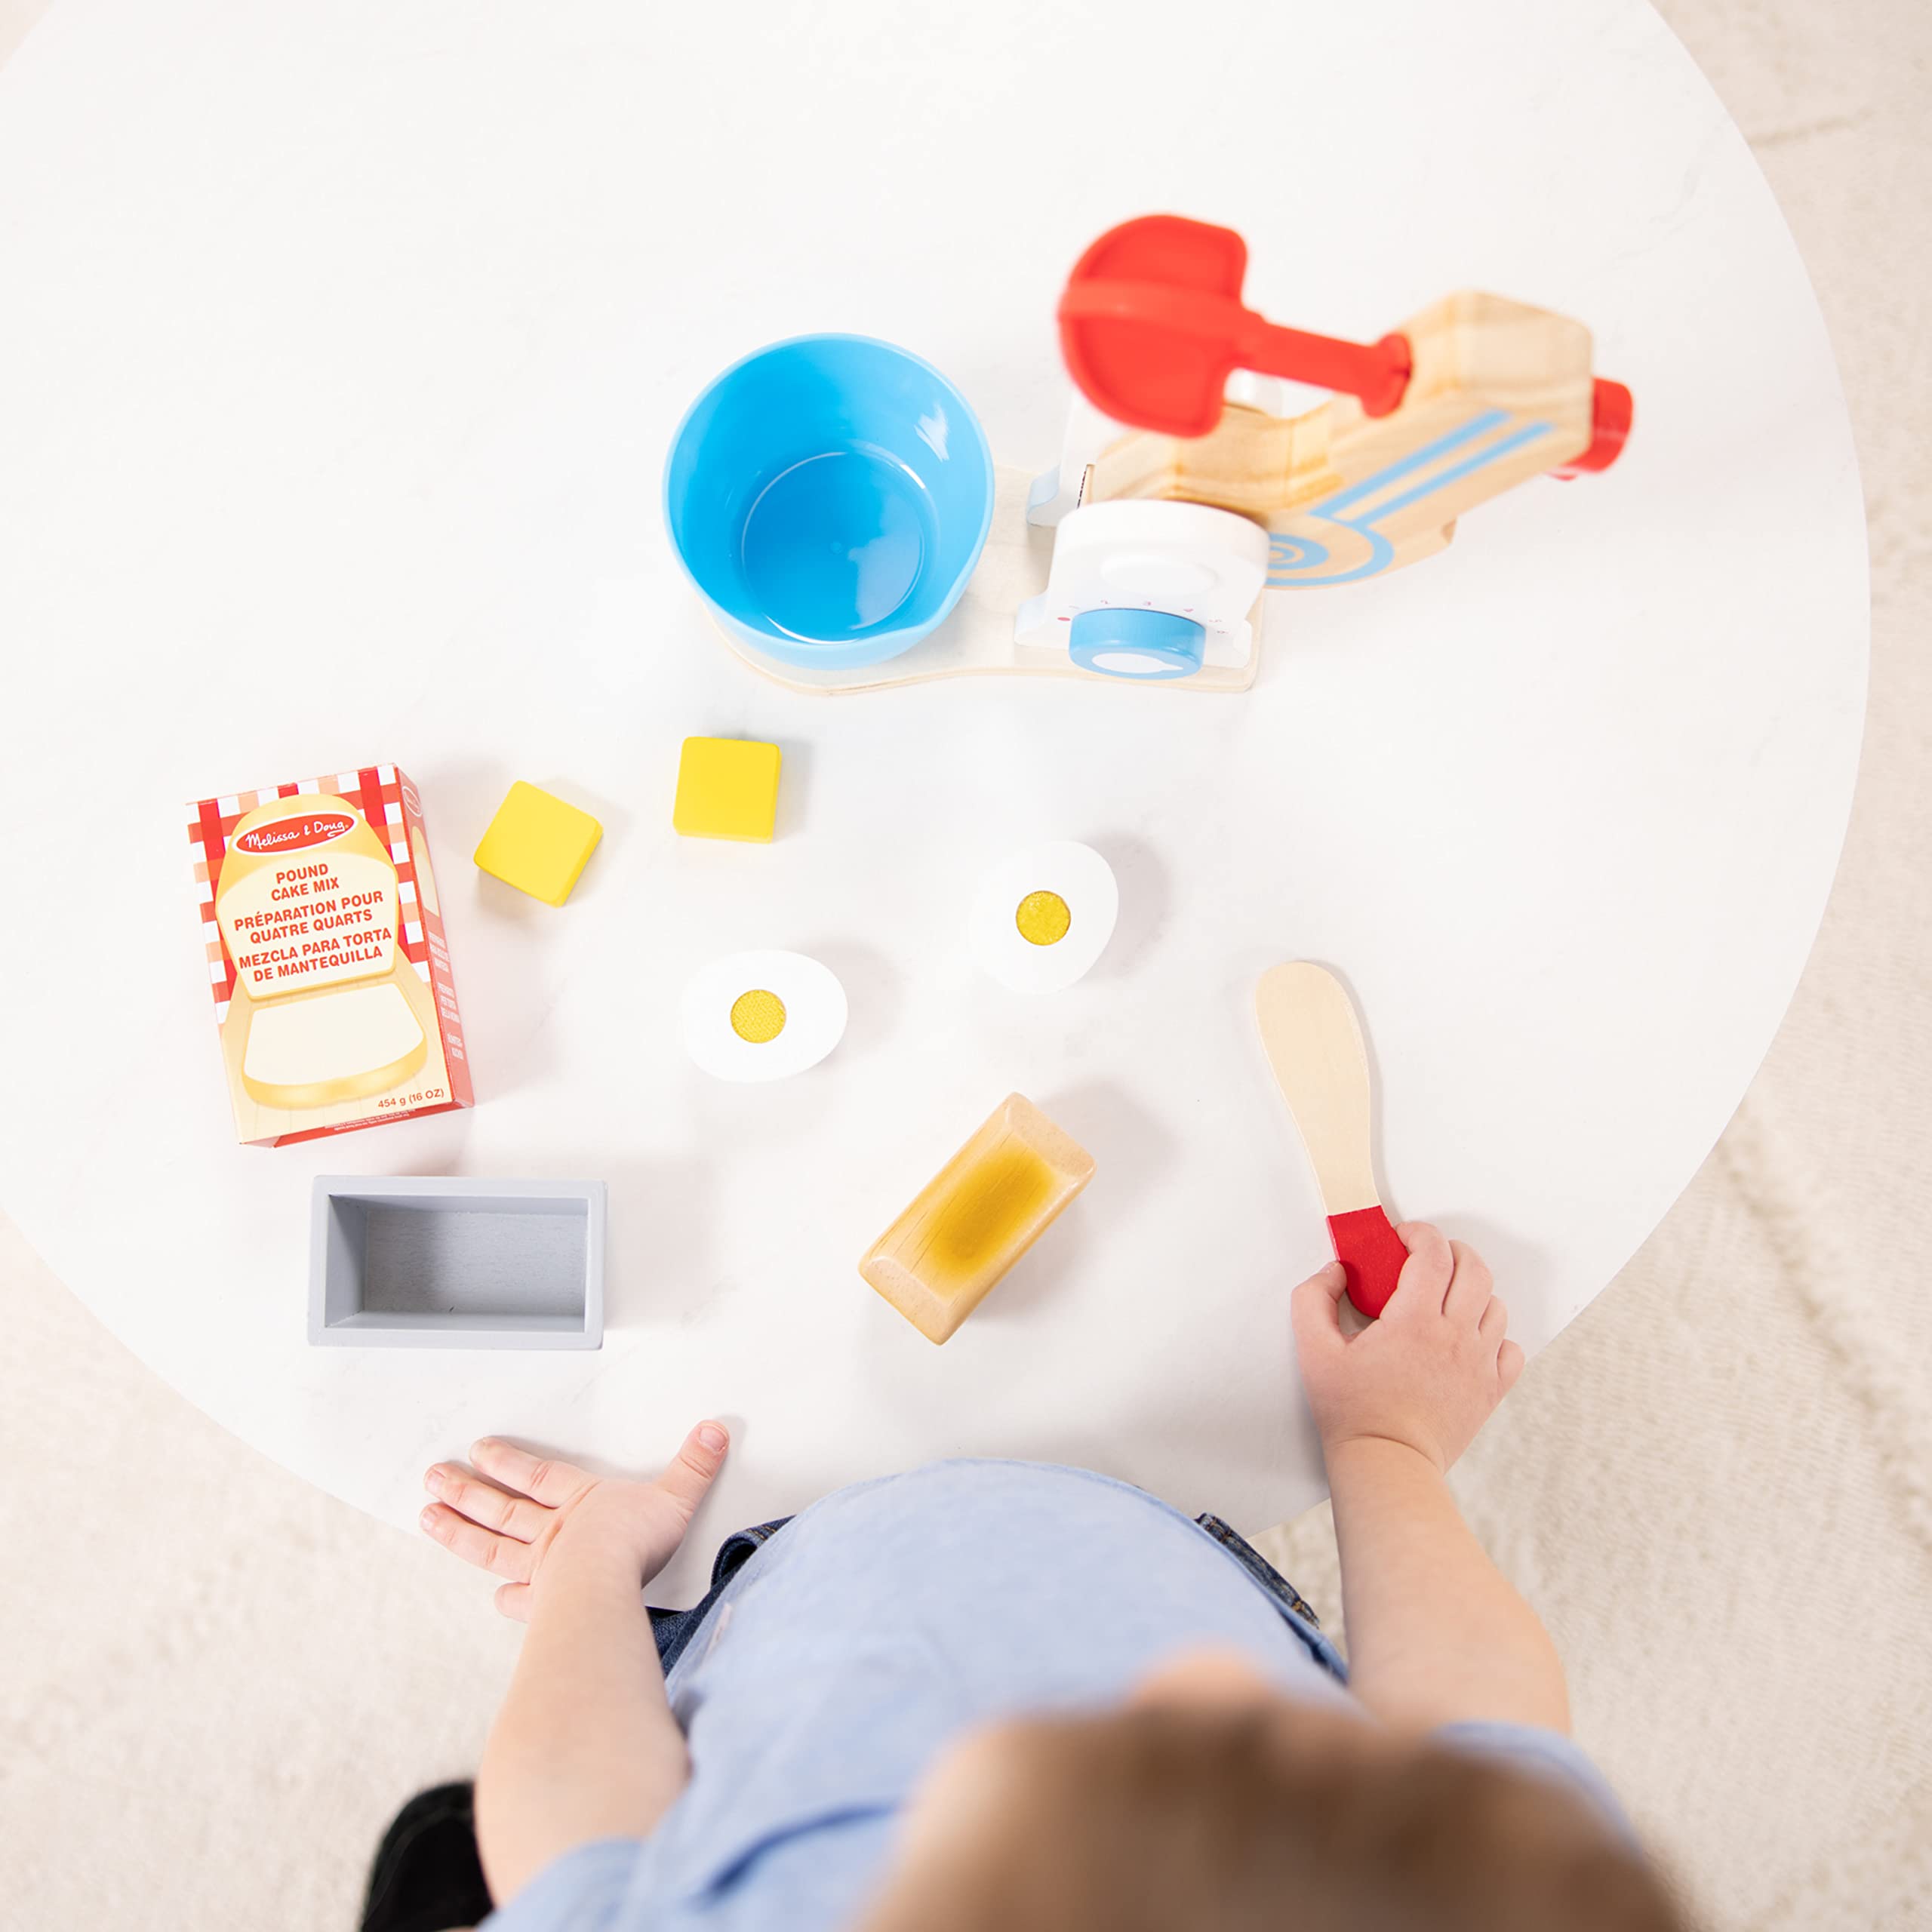 Melissa & Doug Wooden Make-a-Cake Mixer Set (10 pcs) - Play Food and Kitchen Accessories - Kitchen Playset Accessories, Pretend Play Kitchen Toys For Kids Ages 3+